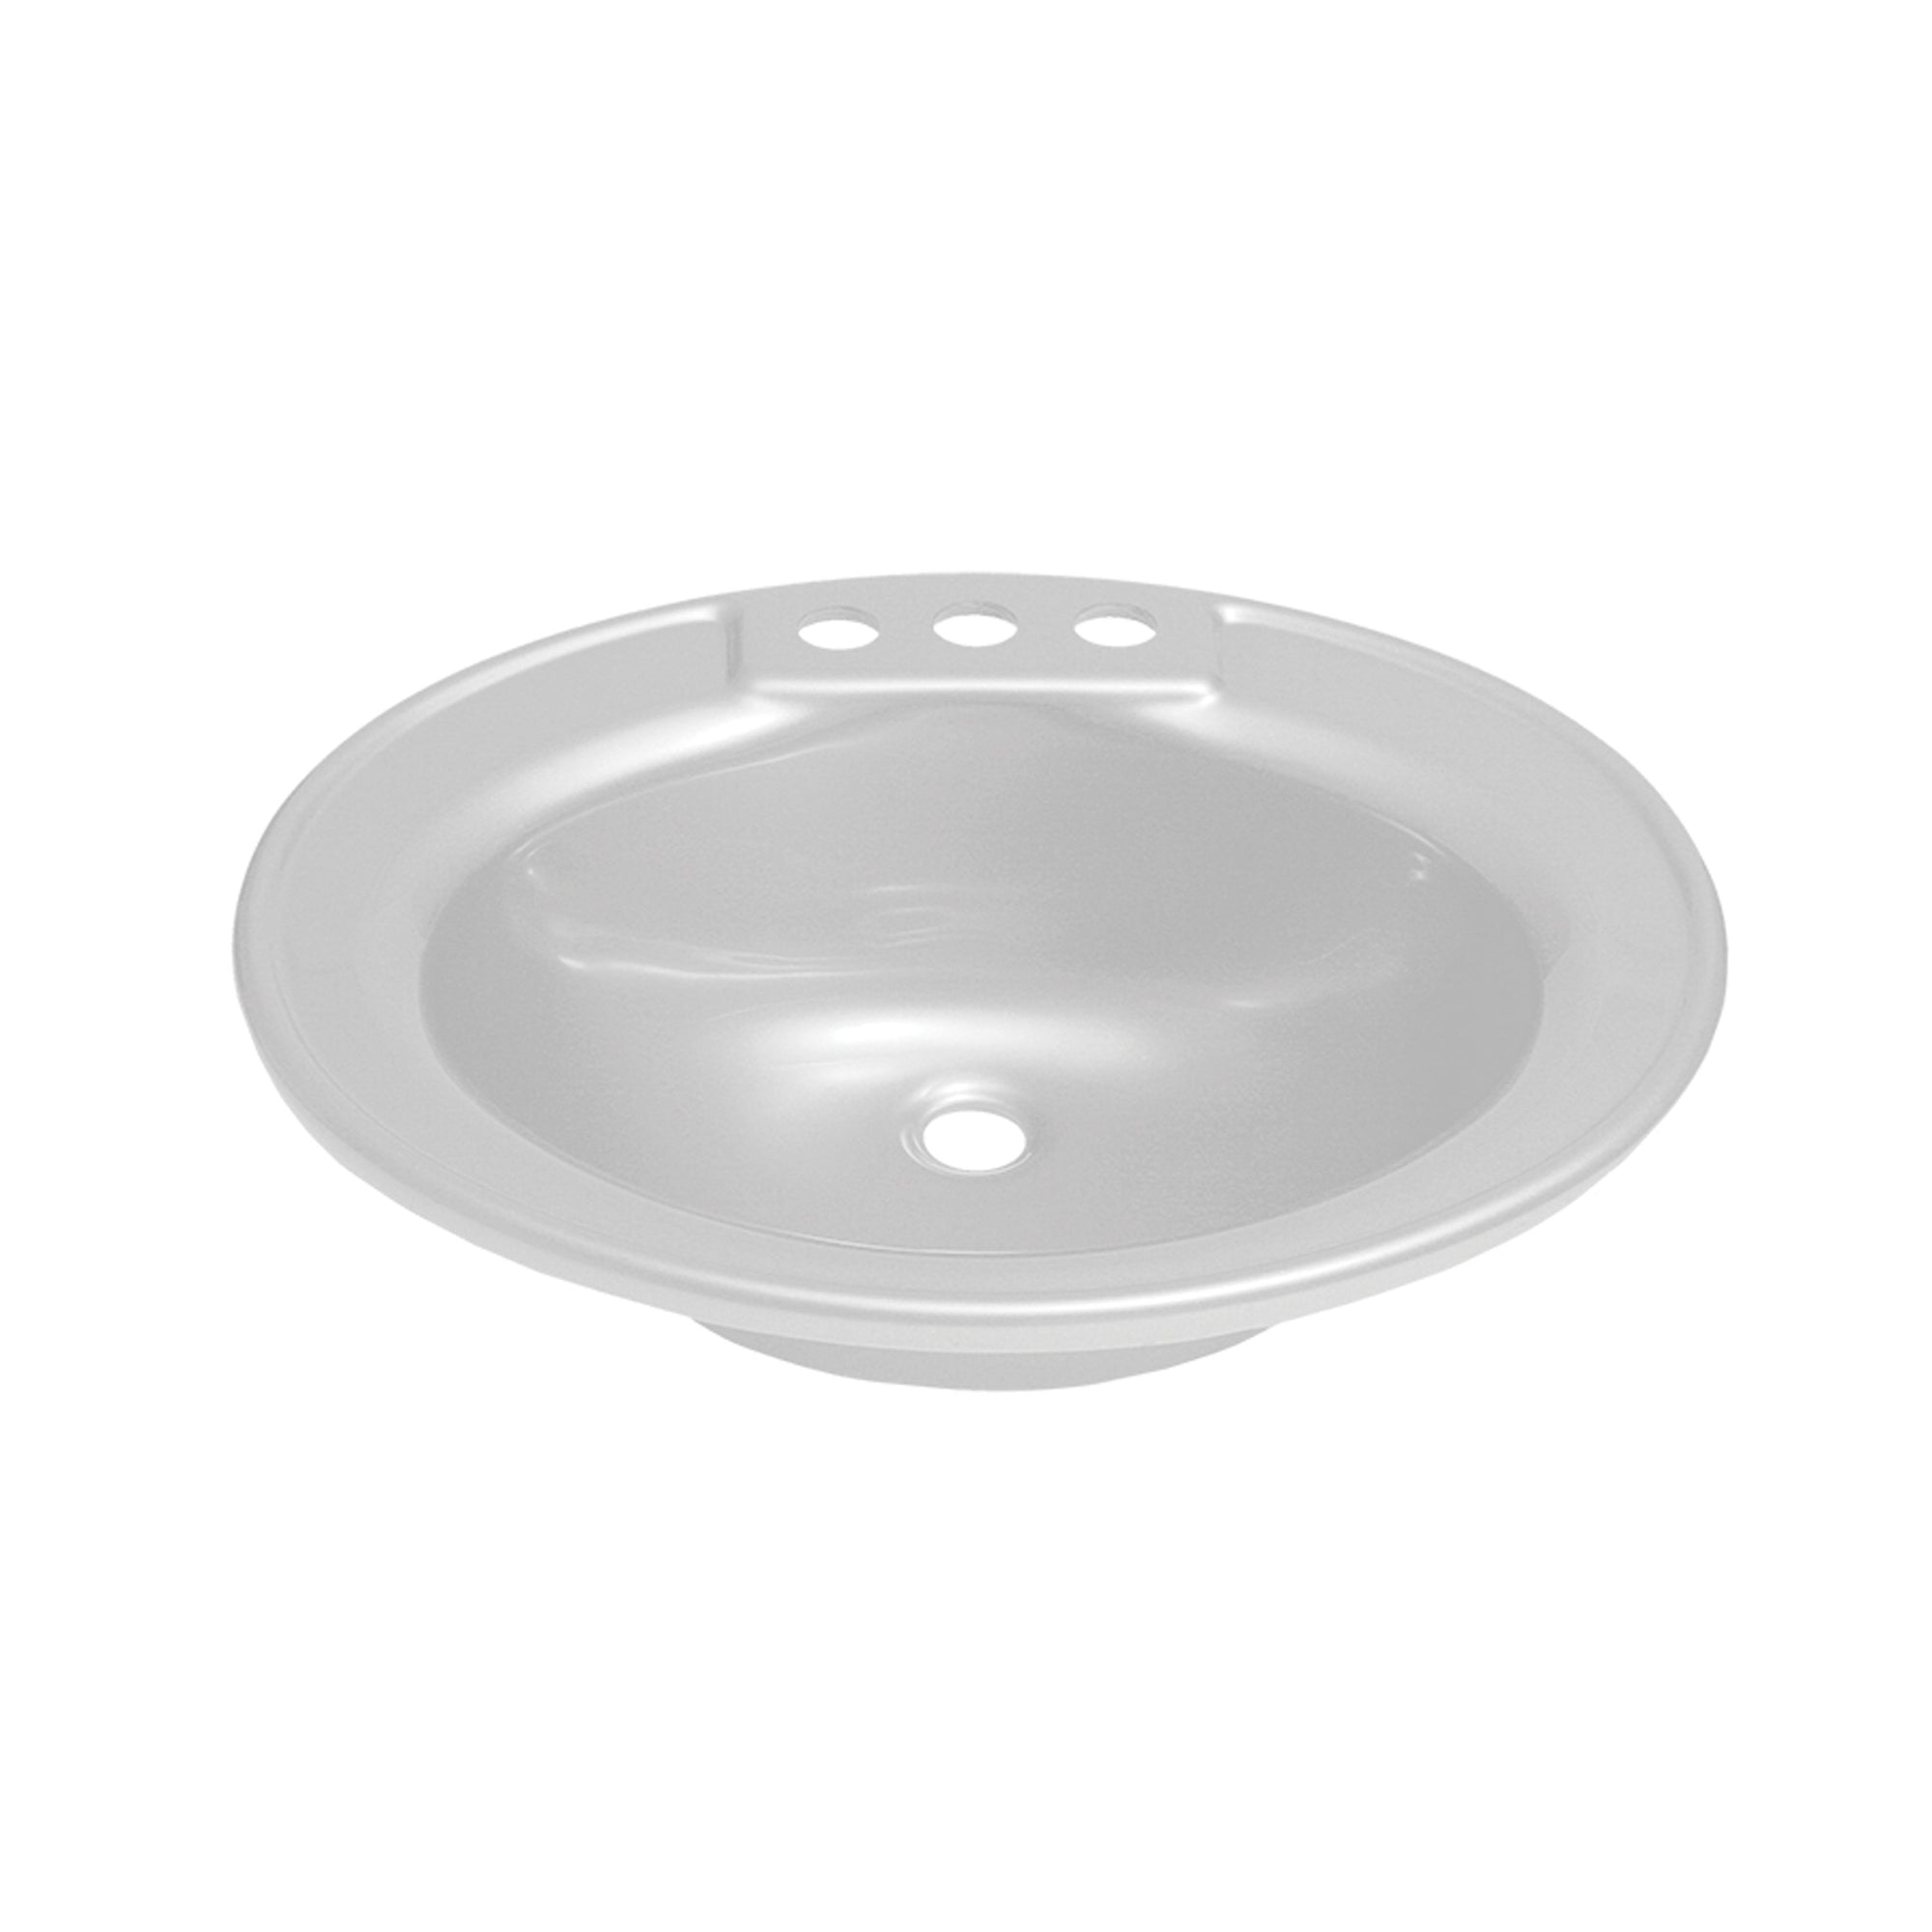 Lippert 209635 3-Hole Acrylic Oval Sink - 17" x 20", White